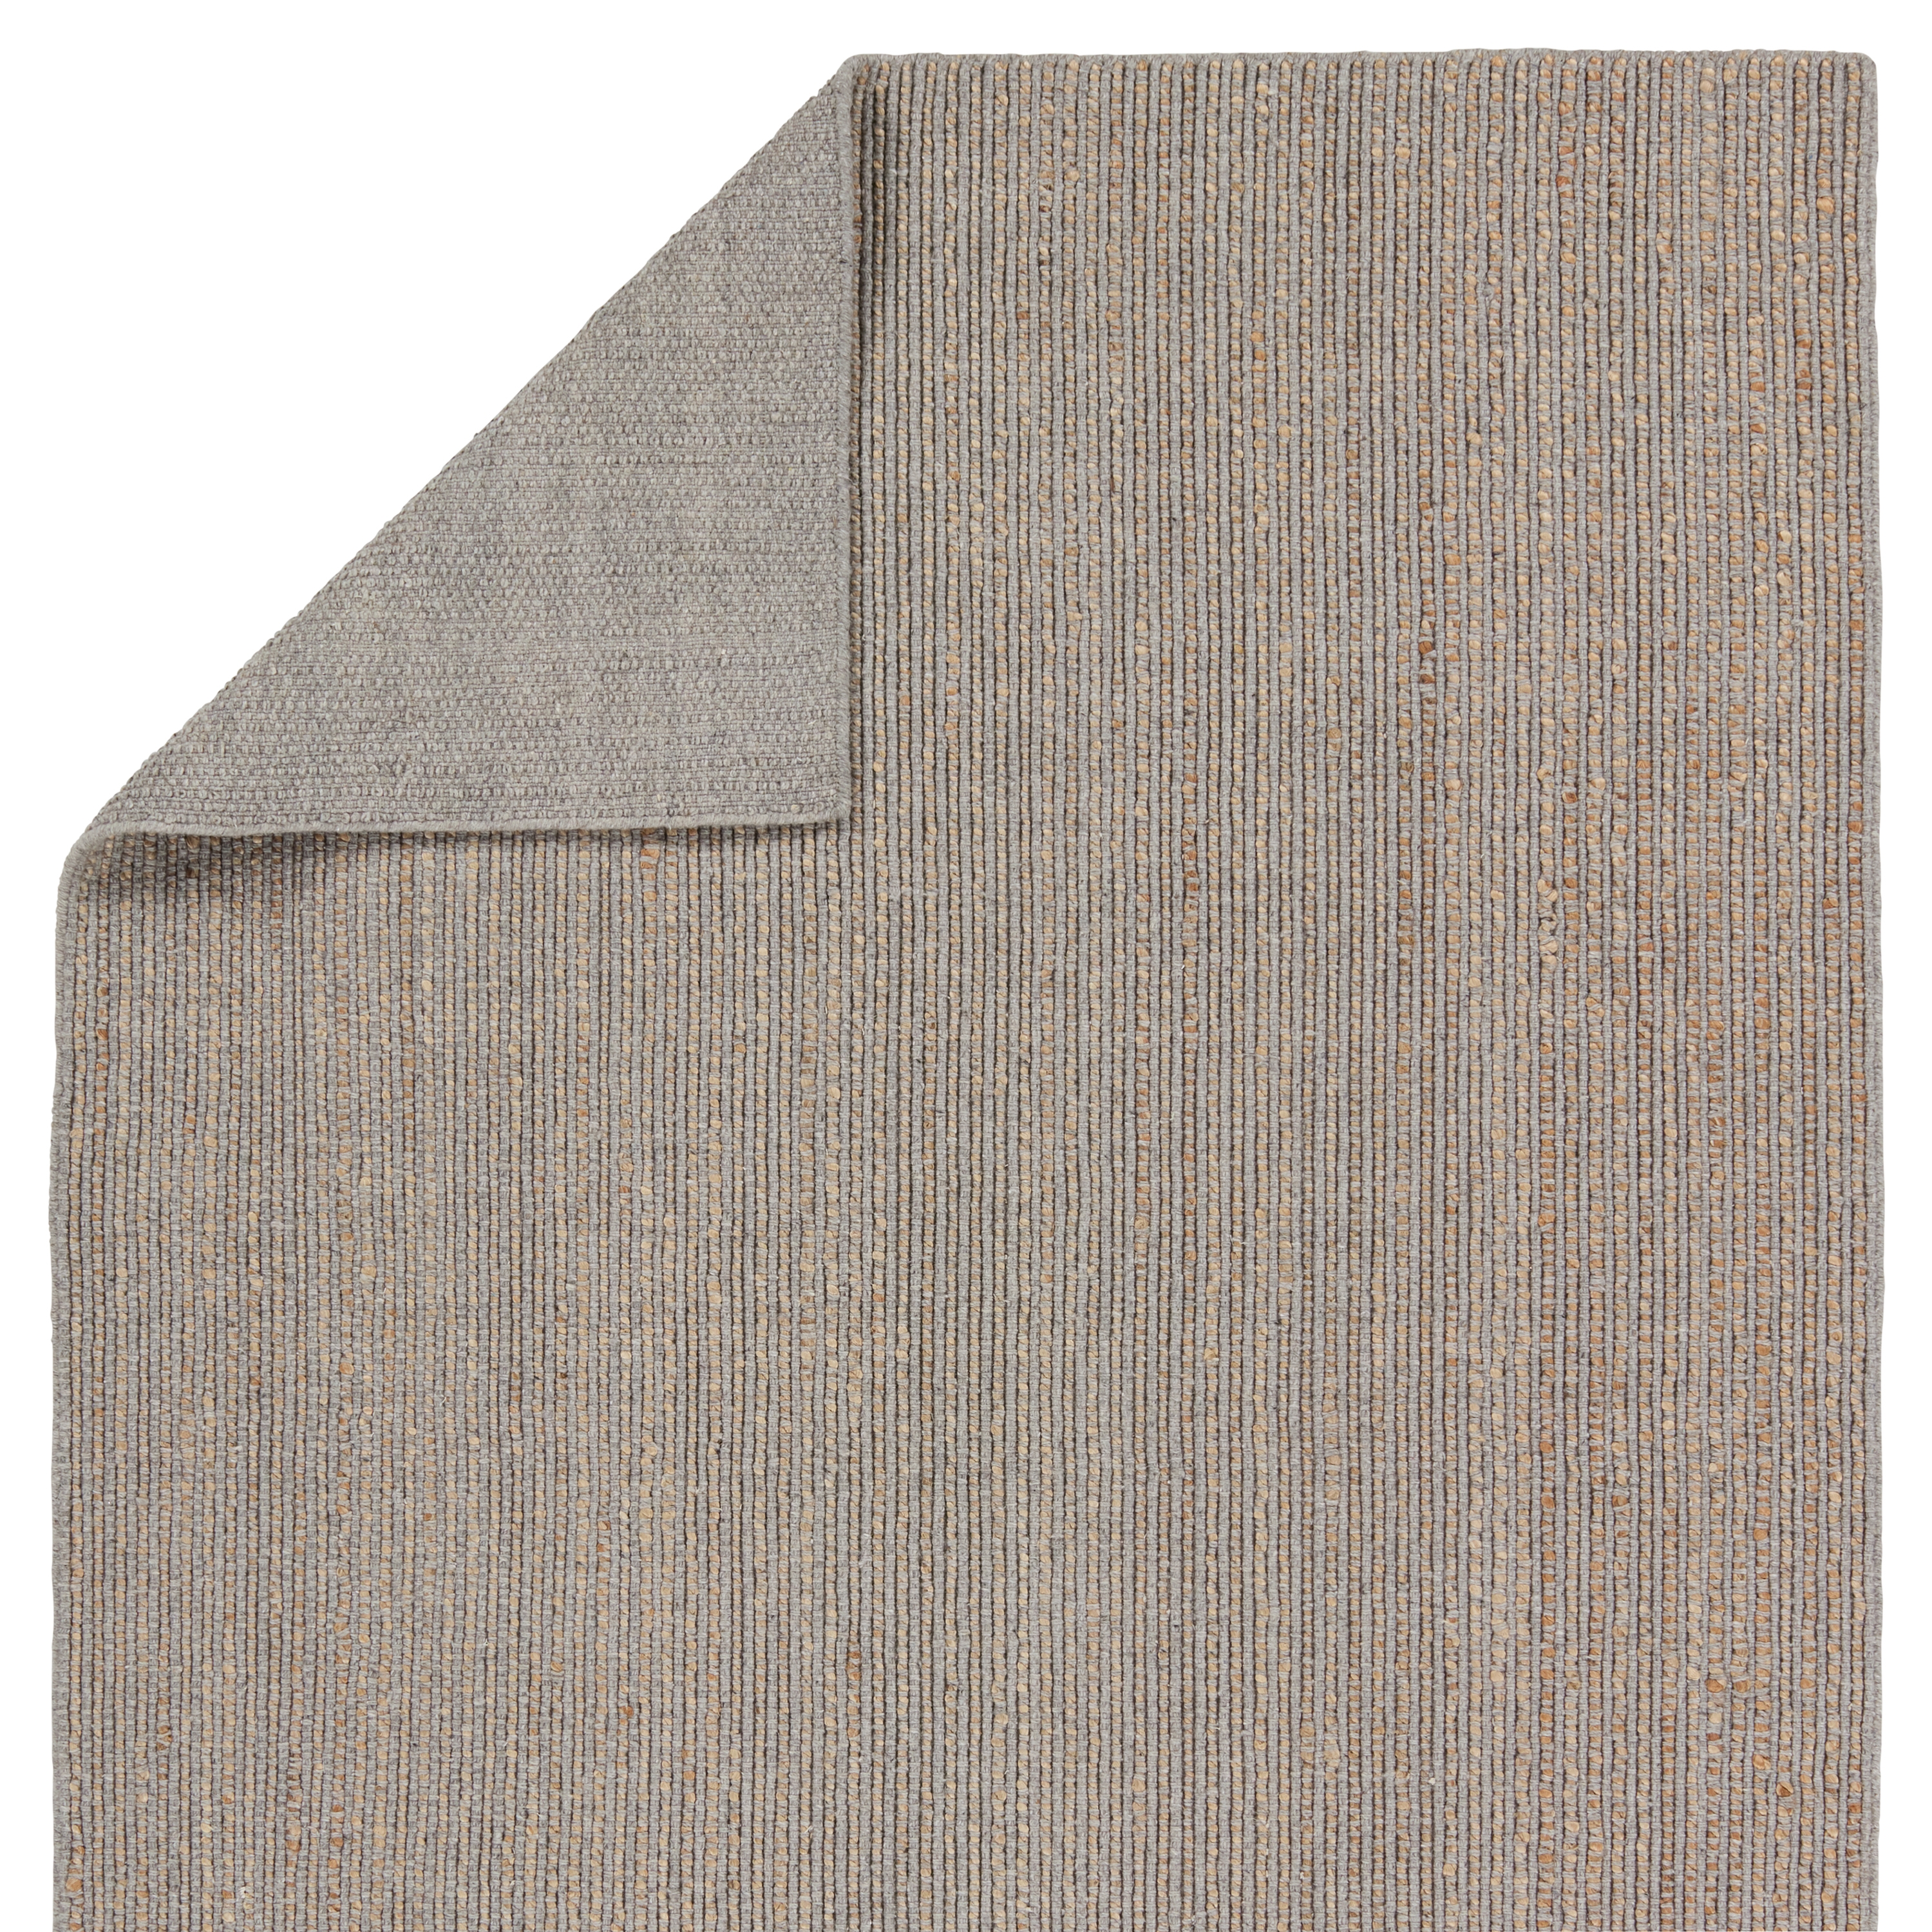 Latona Handmade Striped Gray/ Brown Area Rug (5'X8') - Image 2